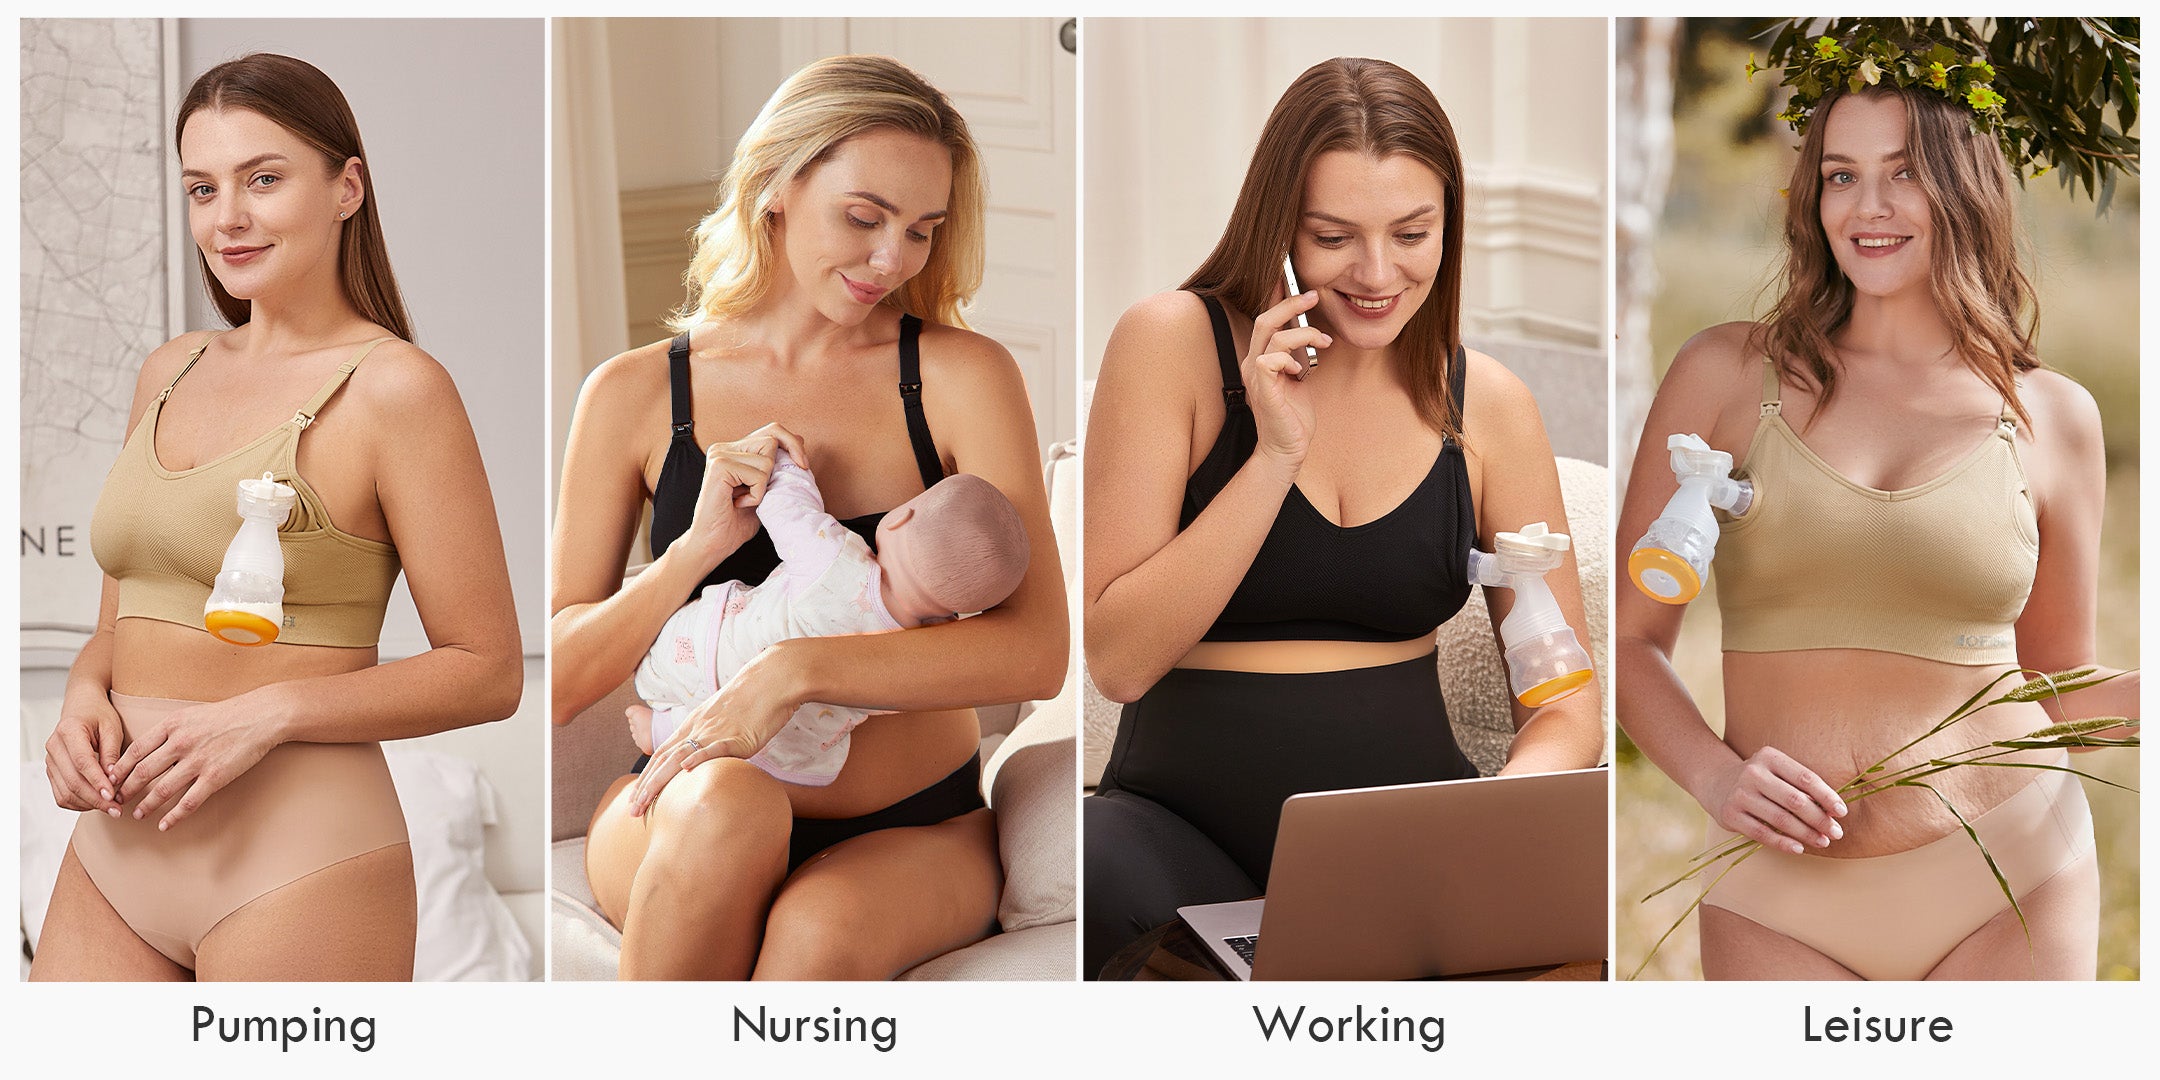 Spdoo Women's Lace Maternity Pregnancy Seamless Breastfeeding Bras No  Underwire